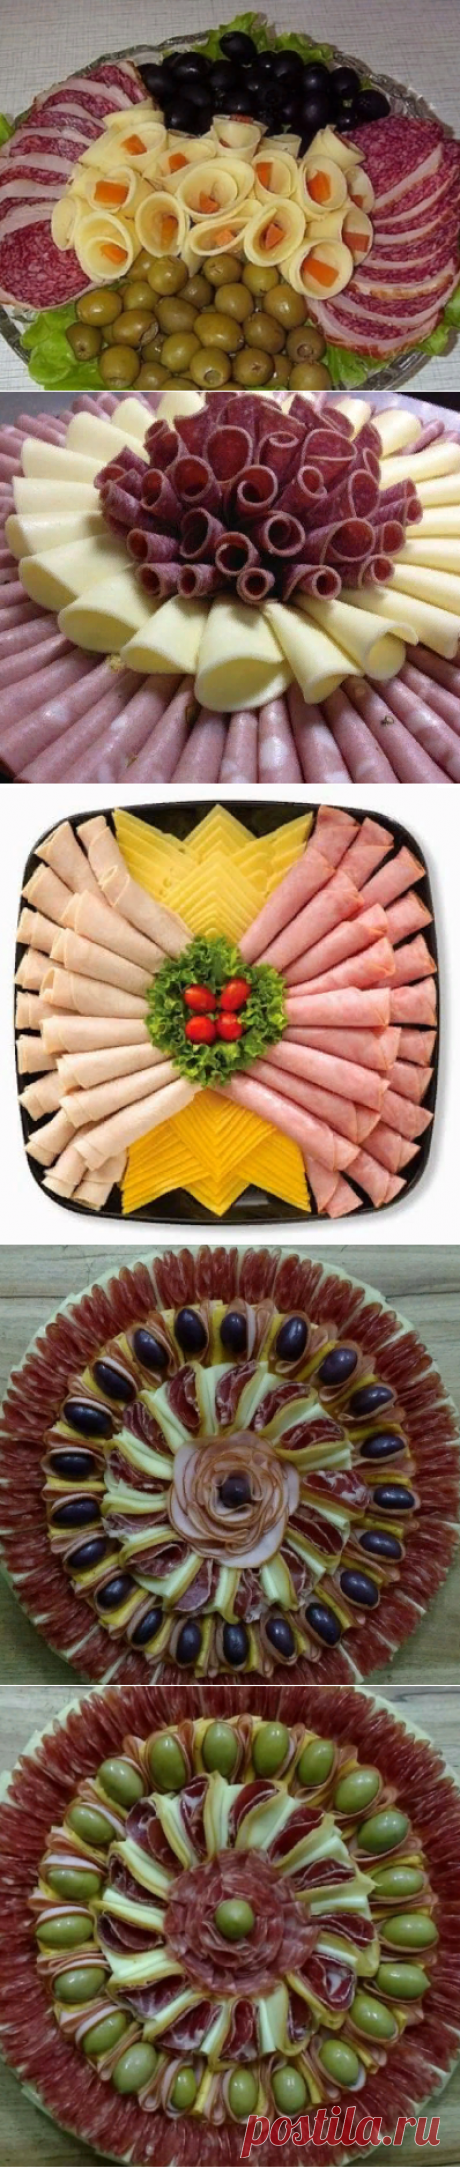 Колбасно-сырная нарезка на новогодний стол | Едим вместе | Яндекс Дзен